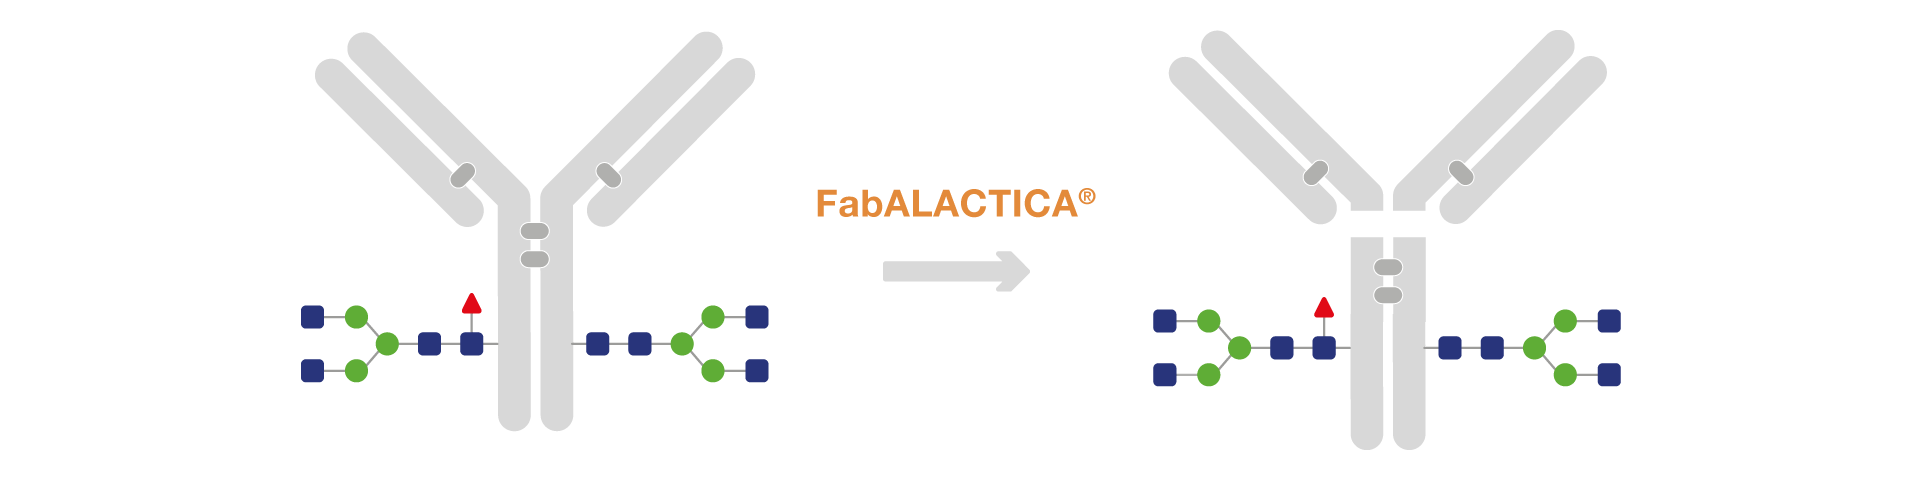 FabALACTICA workflow